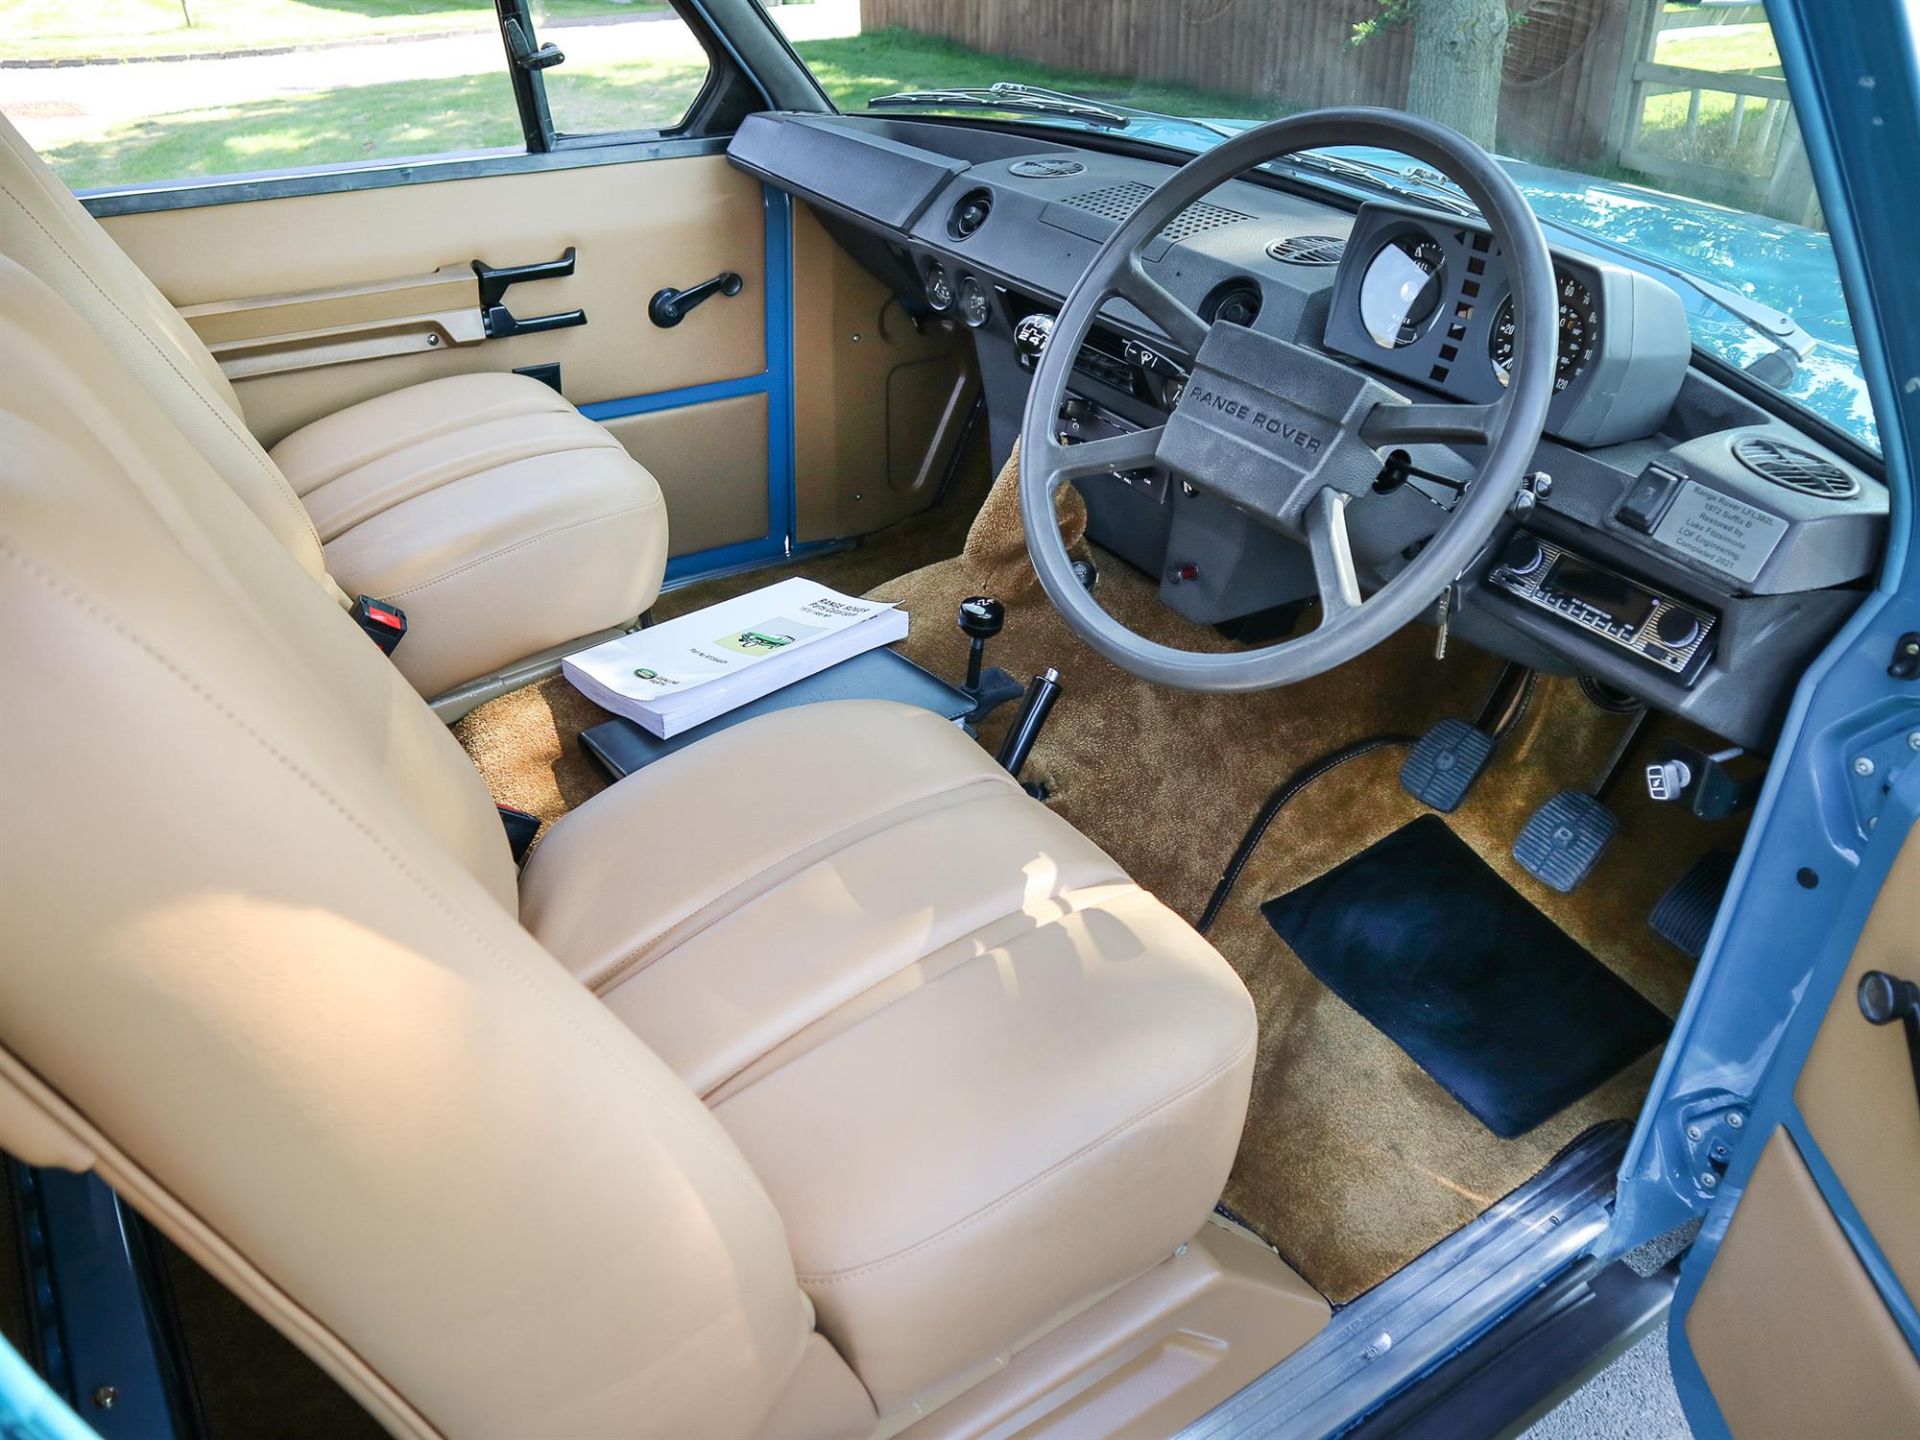 1972 Range Rover 3-Door Suffix B - Fully Restored - Image 2 of 10